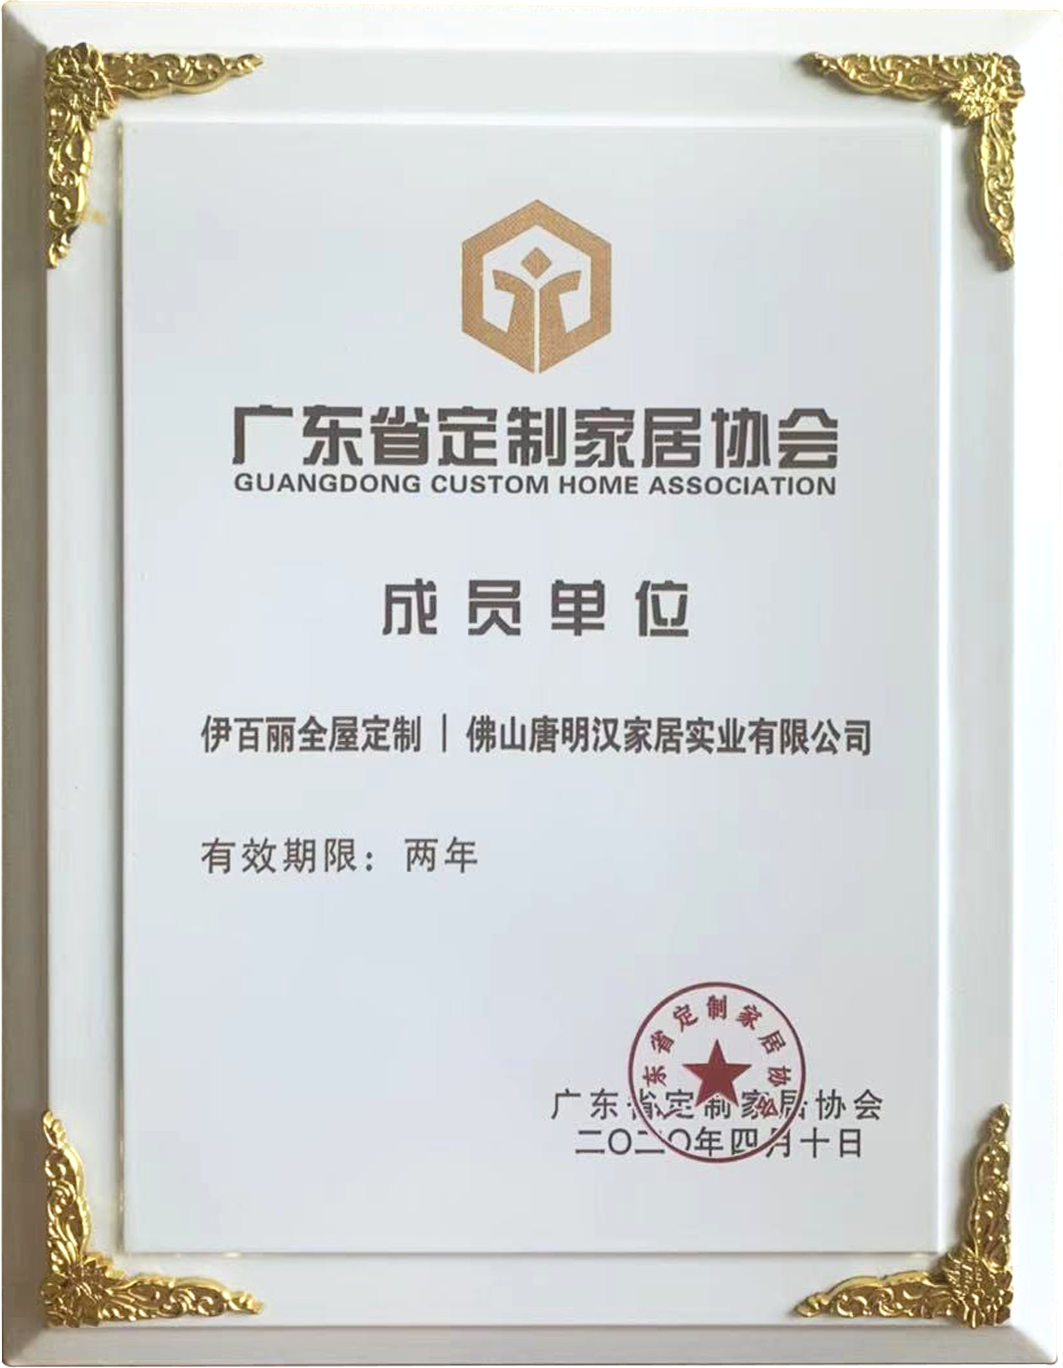 Member unit of Guangdong Custom Home Association